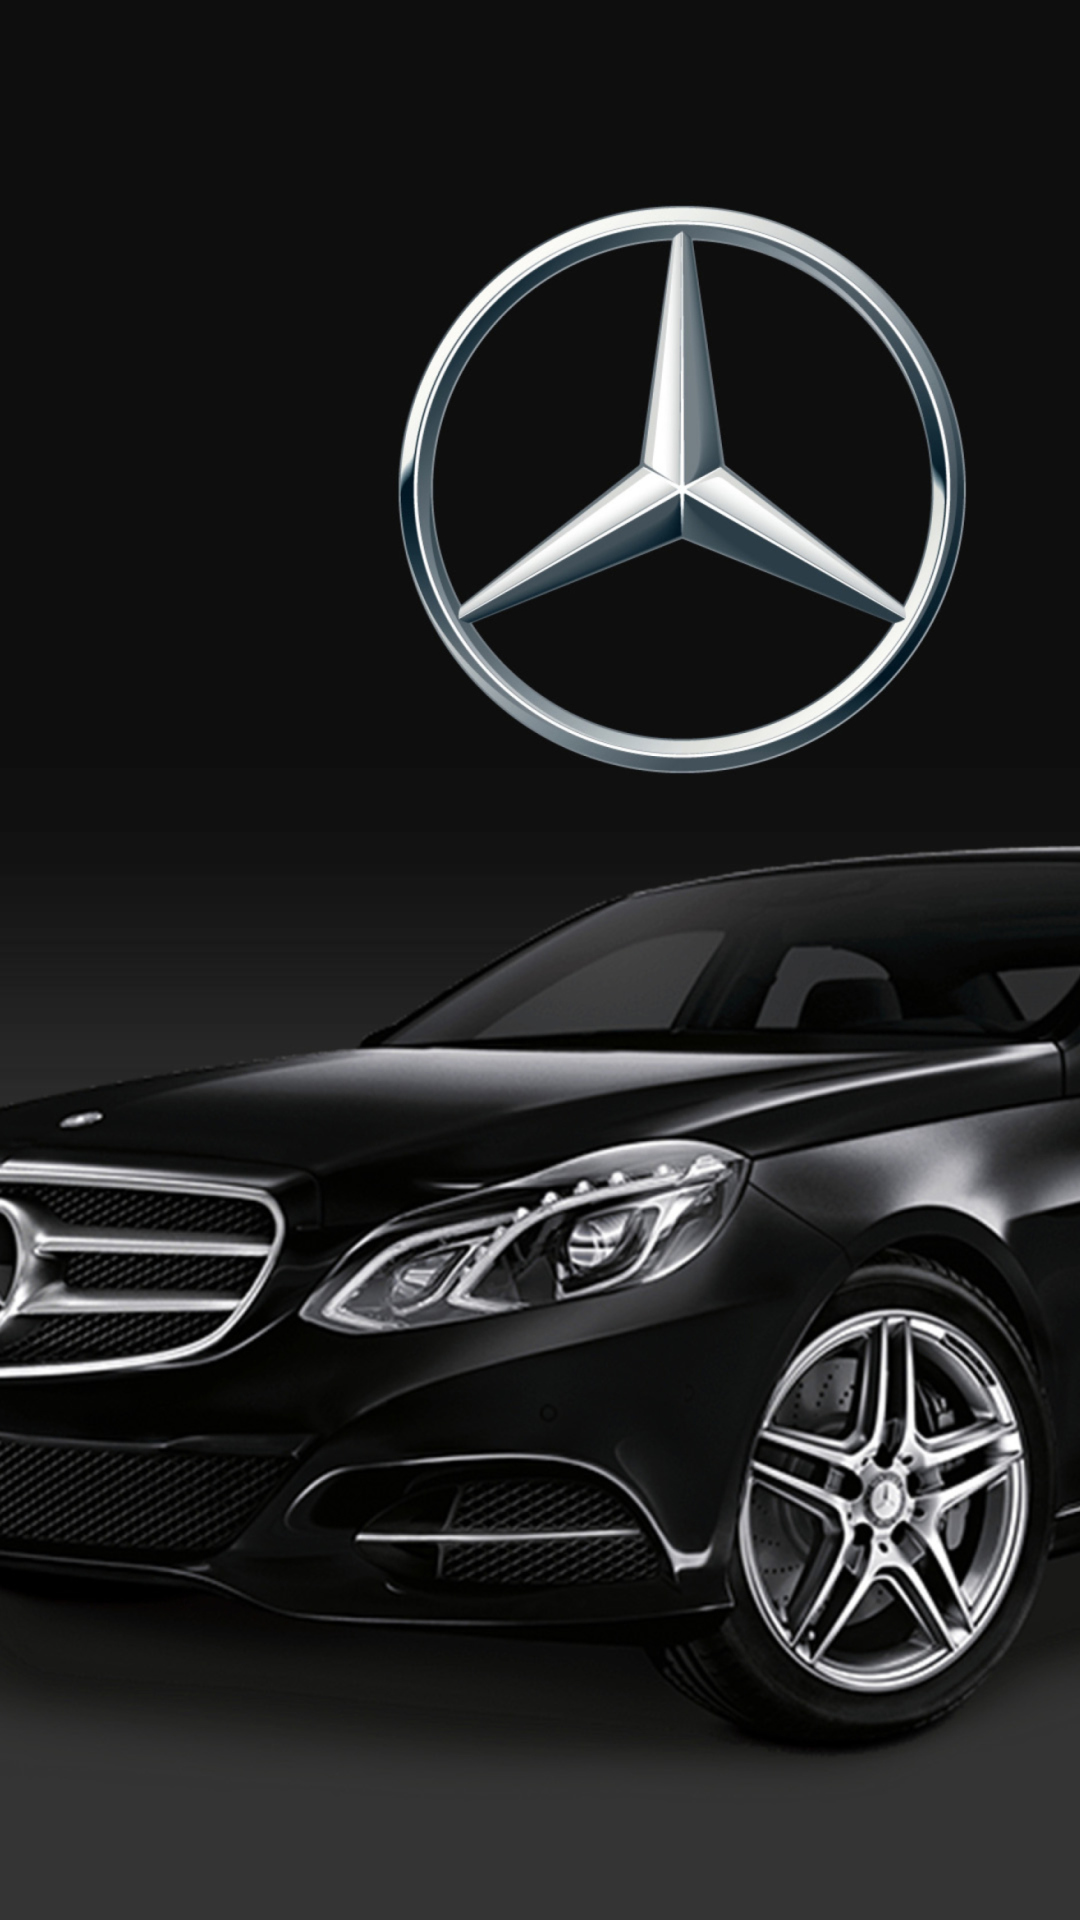 Fondo de pantalla Mercedes S-Class 1080x1920